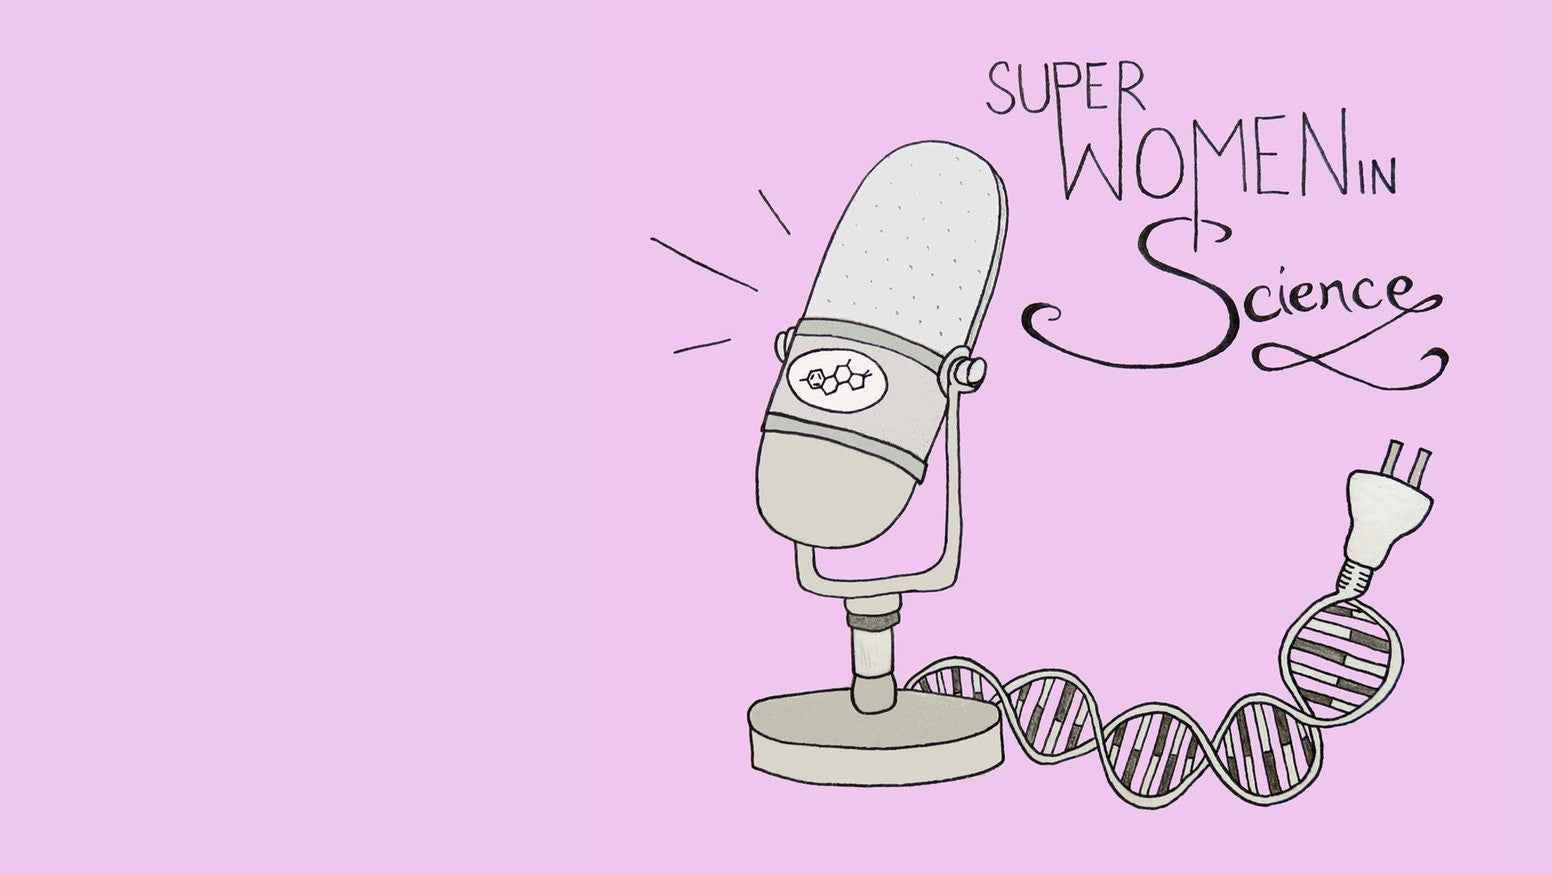 SuperWomen in Science Podcast